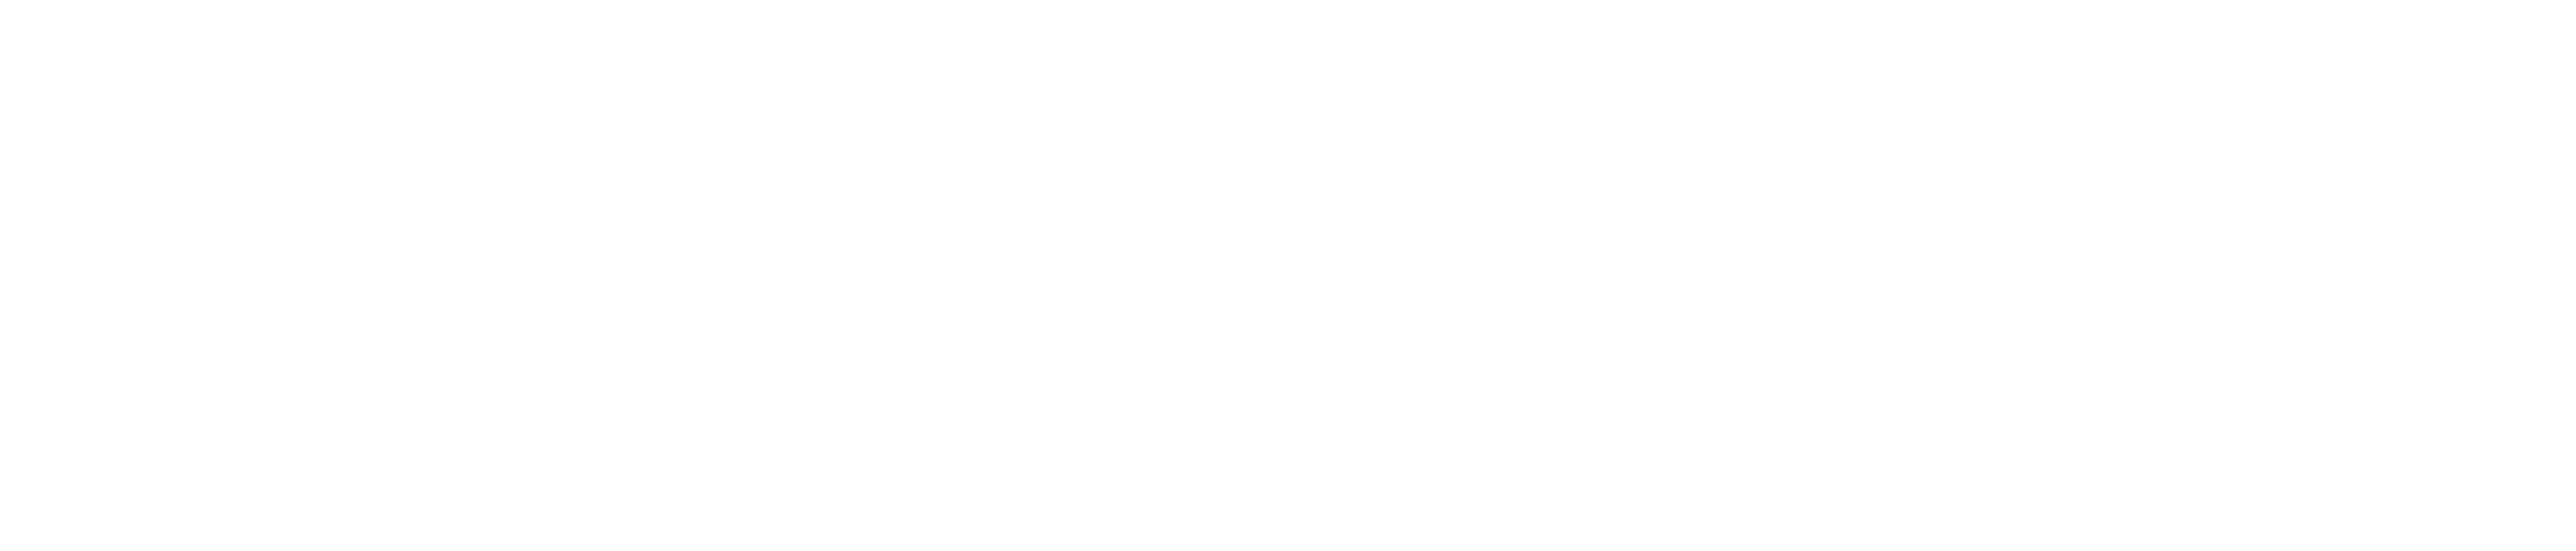 Klickhütte - Online Marketing